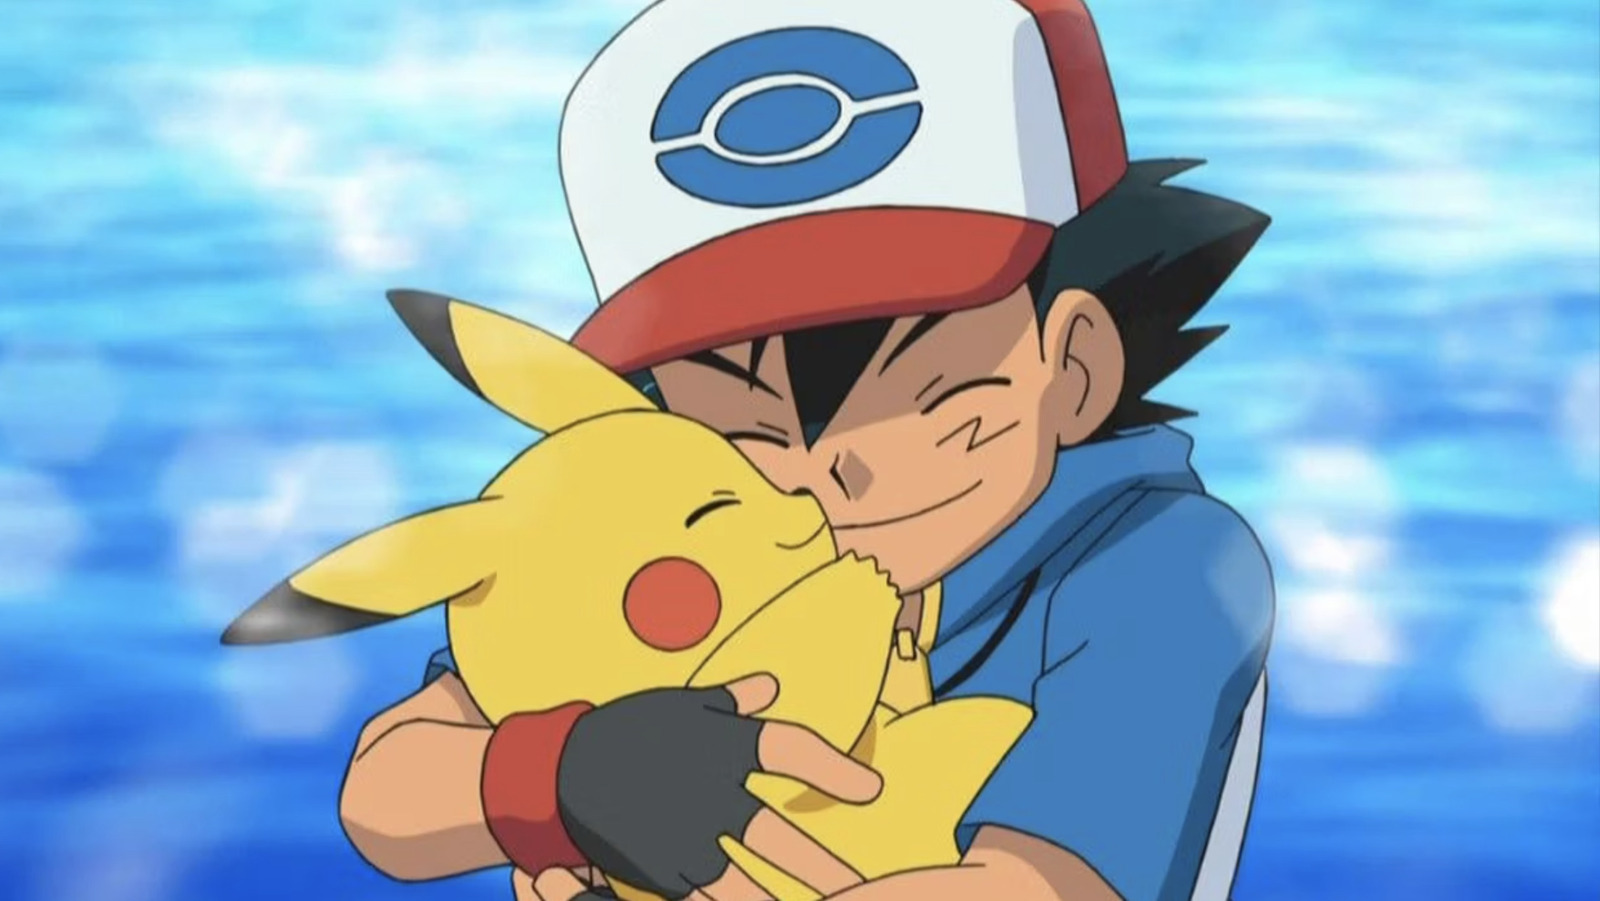 Next time, a new beginning': Ash Ketchum ends Pokémon journey